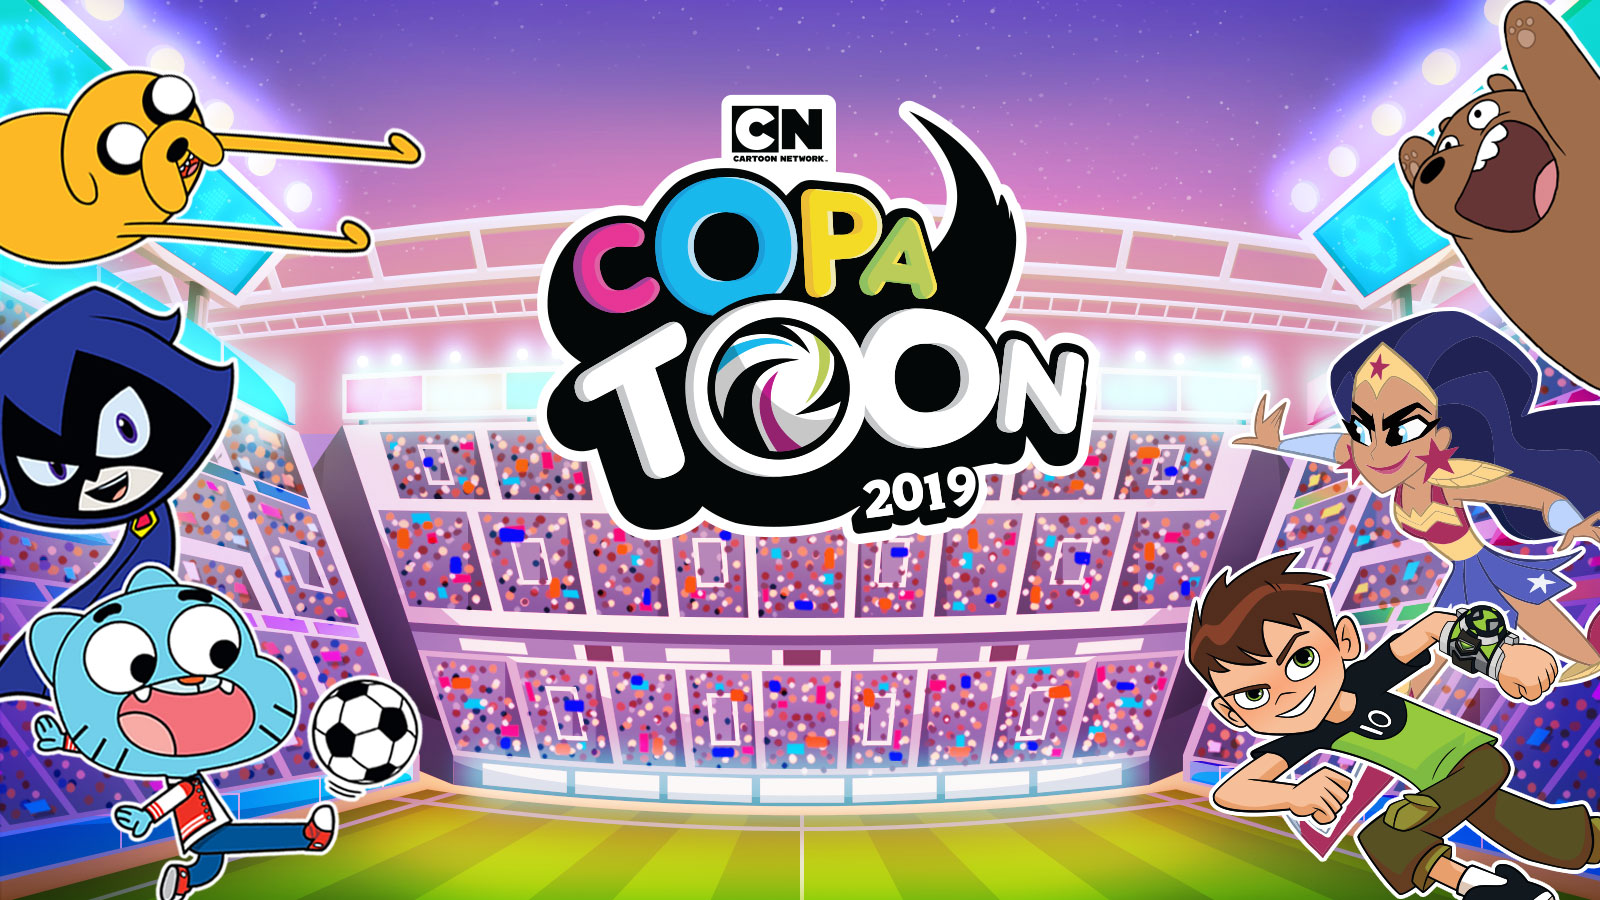 Copa Toon 2019 | Network